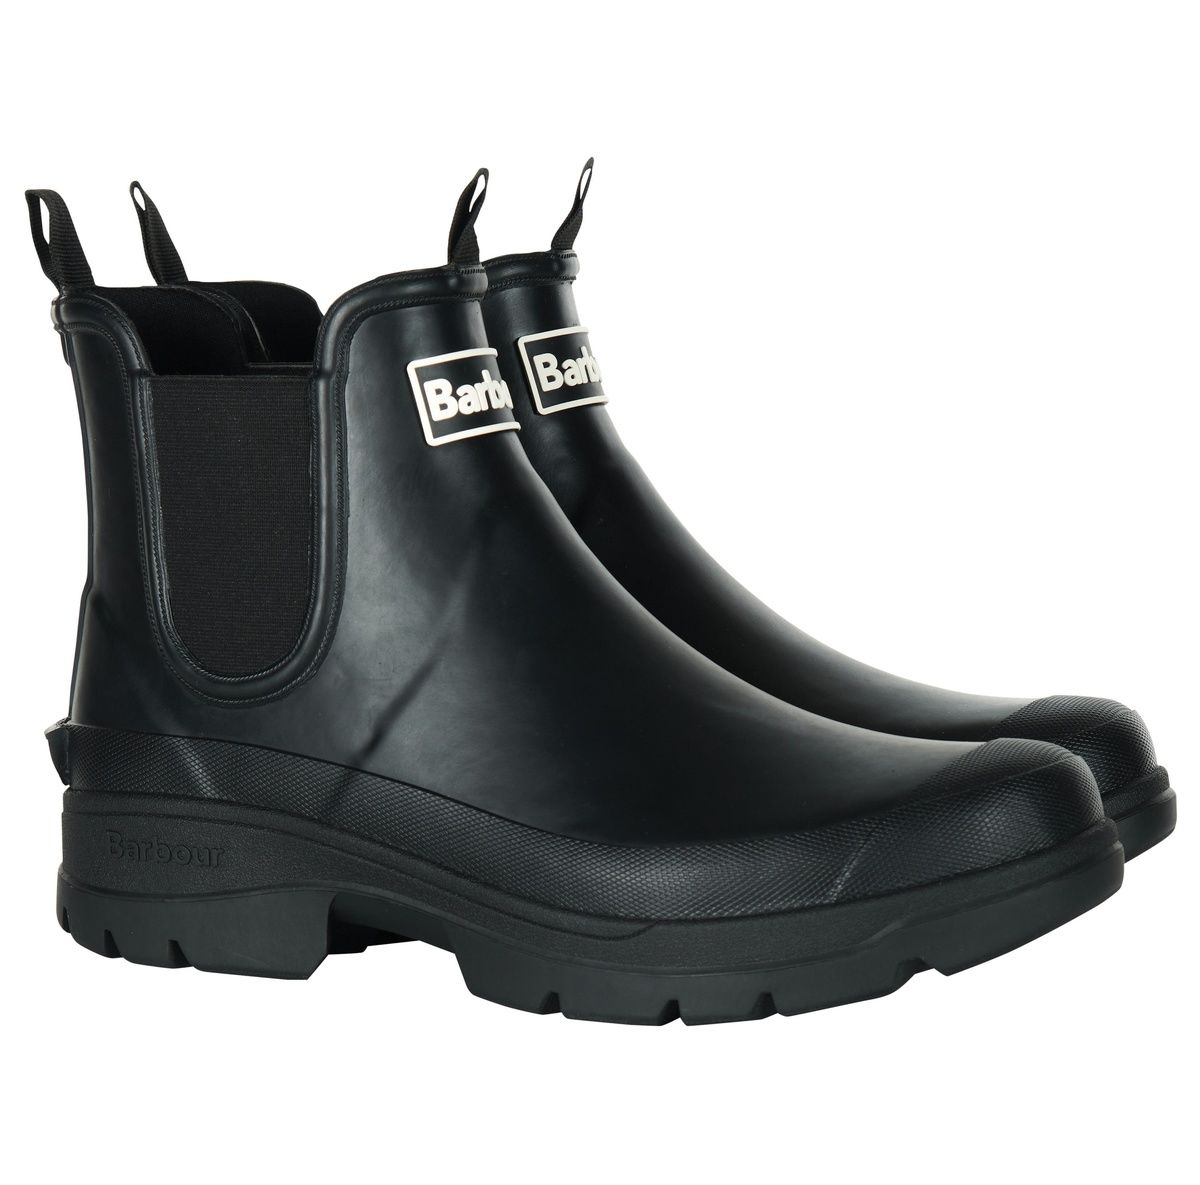 Barbour Nimbus Wellie Black Boots Mrf0028-Bk31 In Size 9 In Plain Black